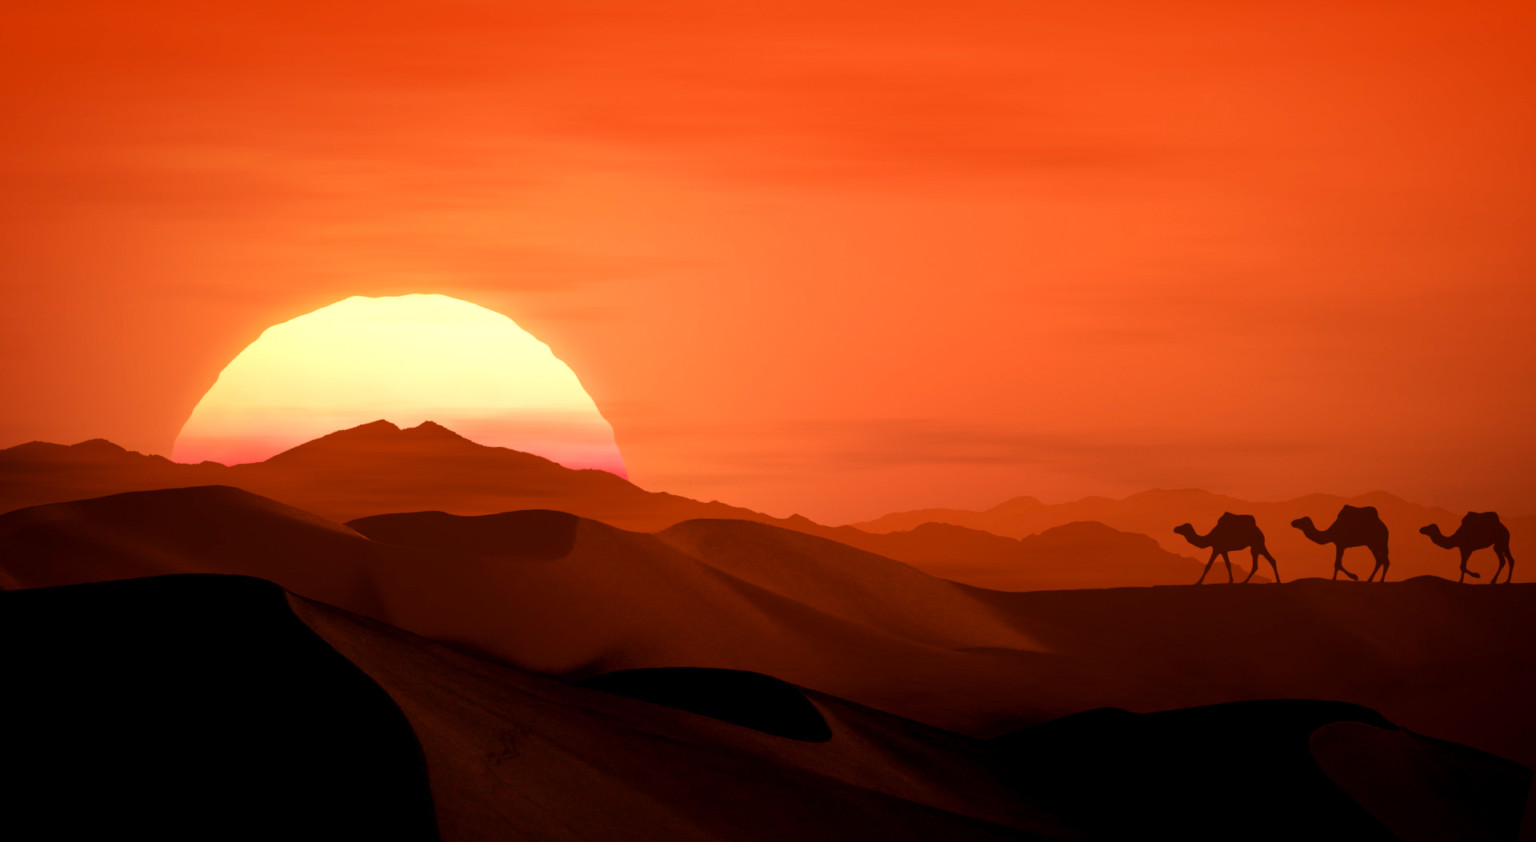 Orange sunset desert hills with 3 camels walking along horizon.